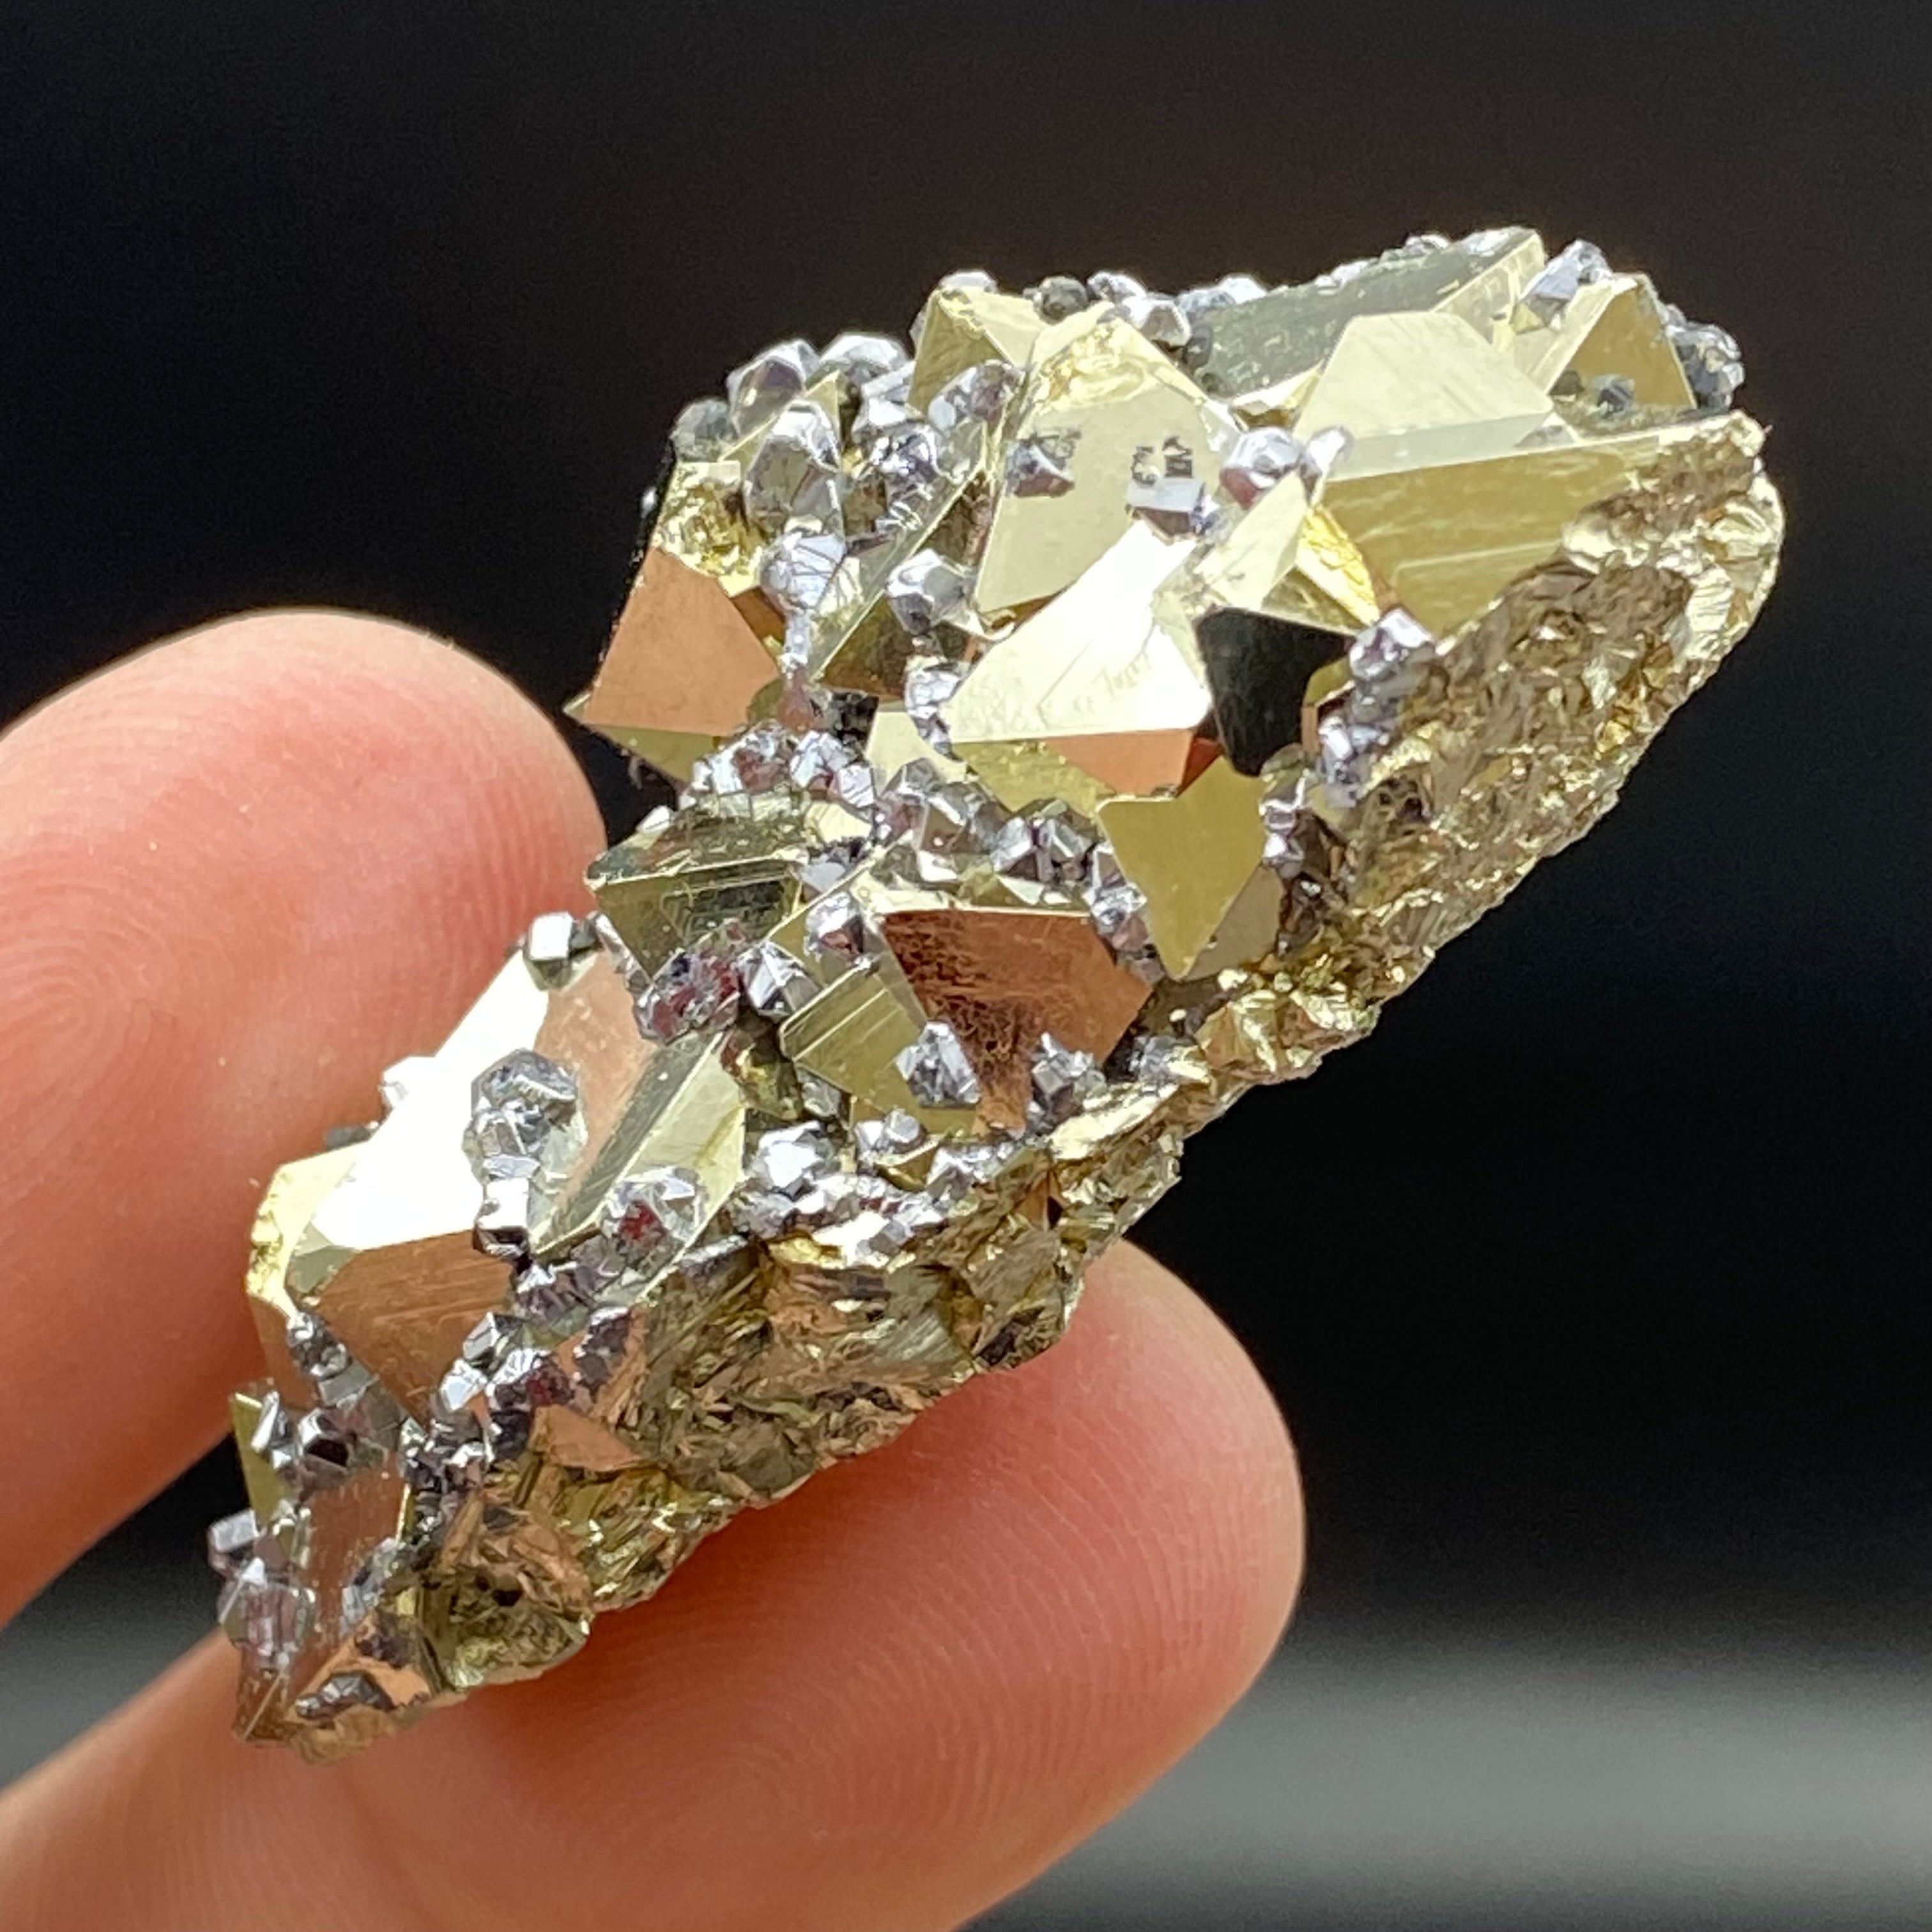 Peruvian Pyrite Crystal - 119